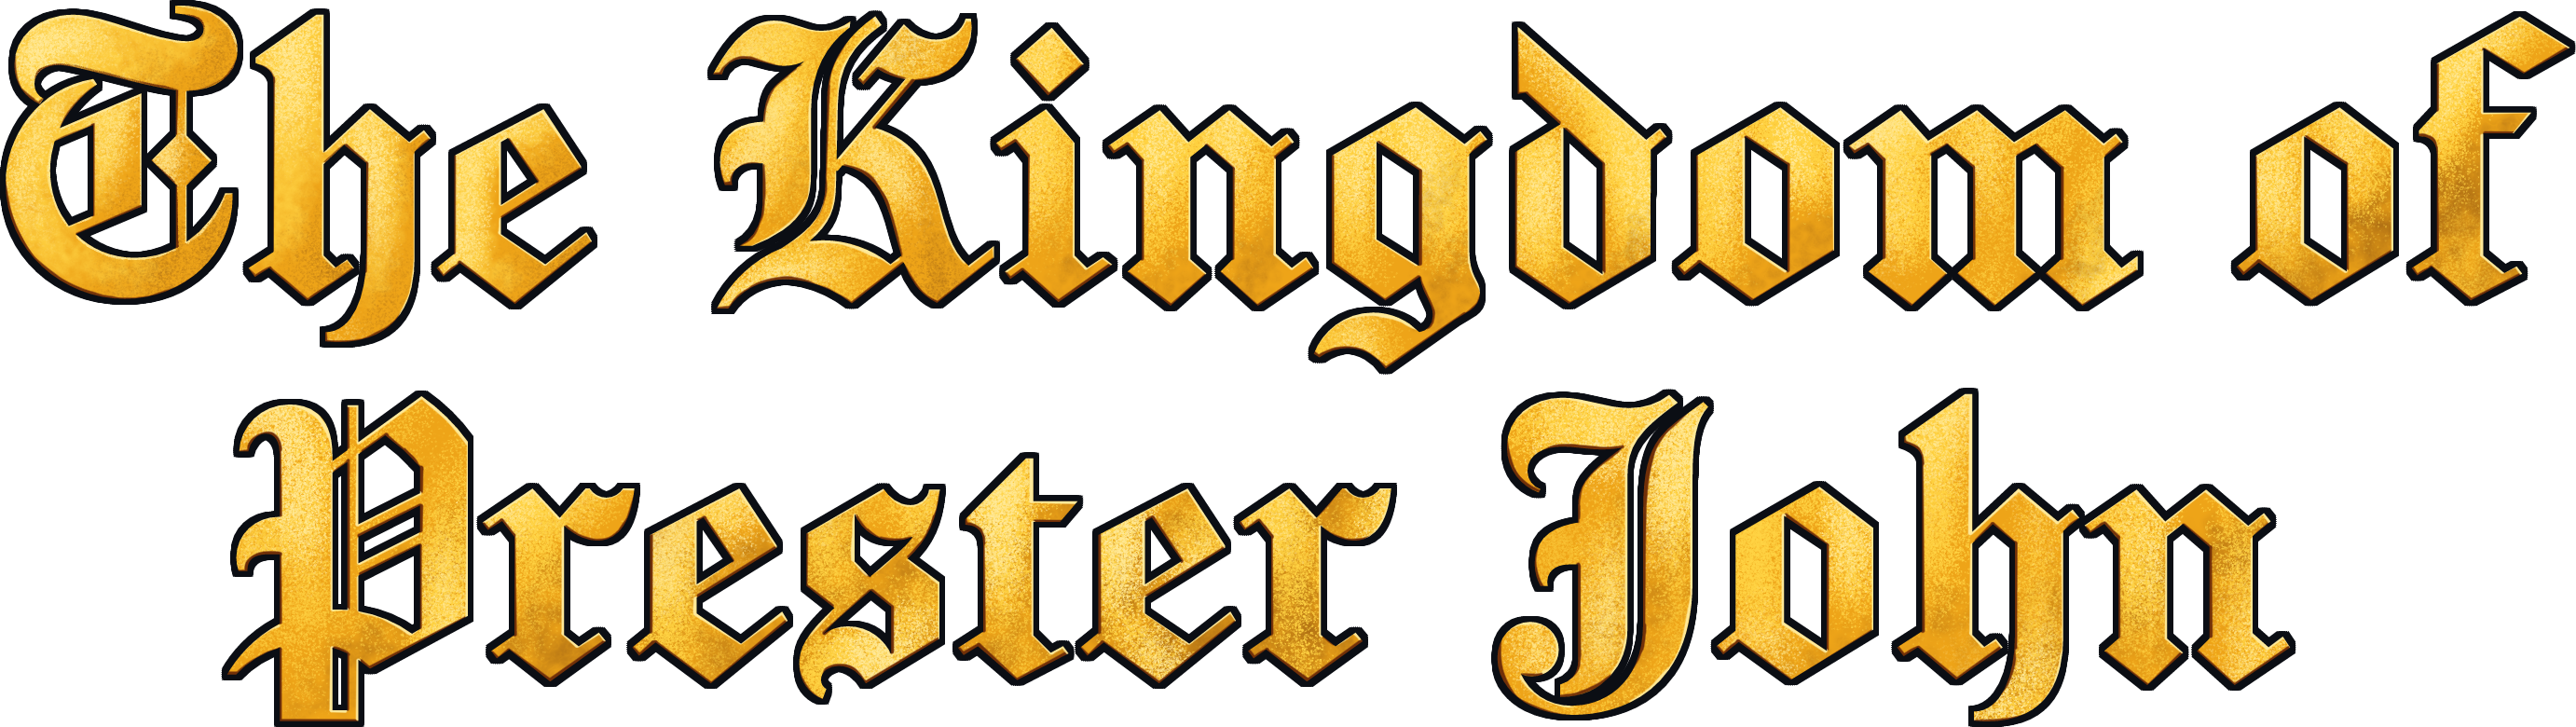 The Kingdom of Prester John TTRPG